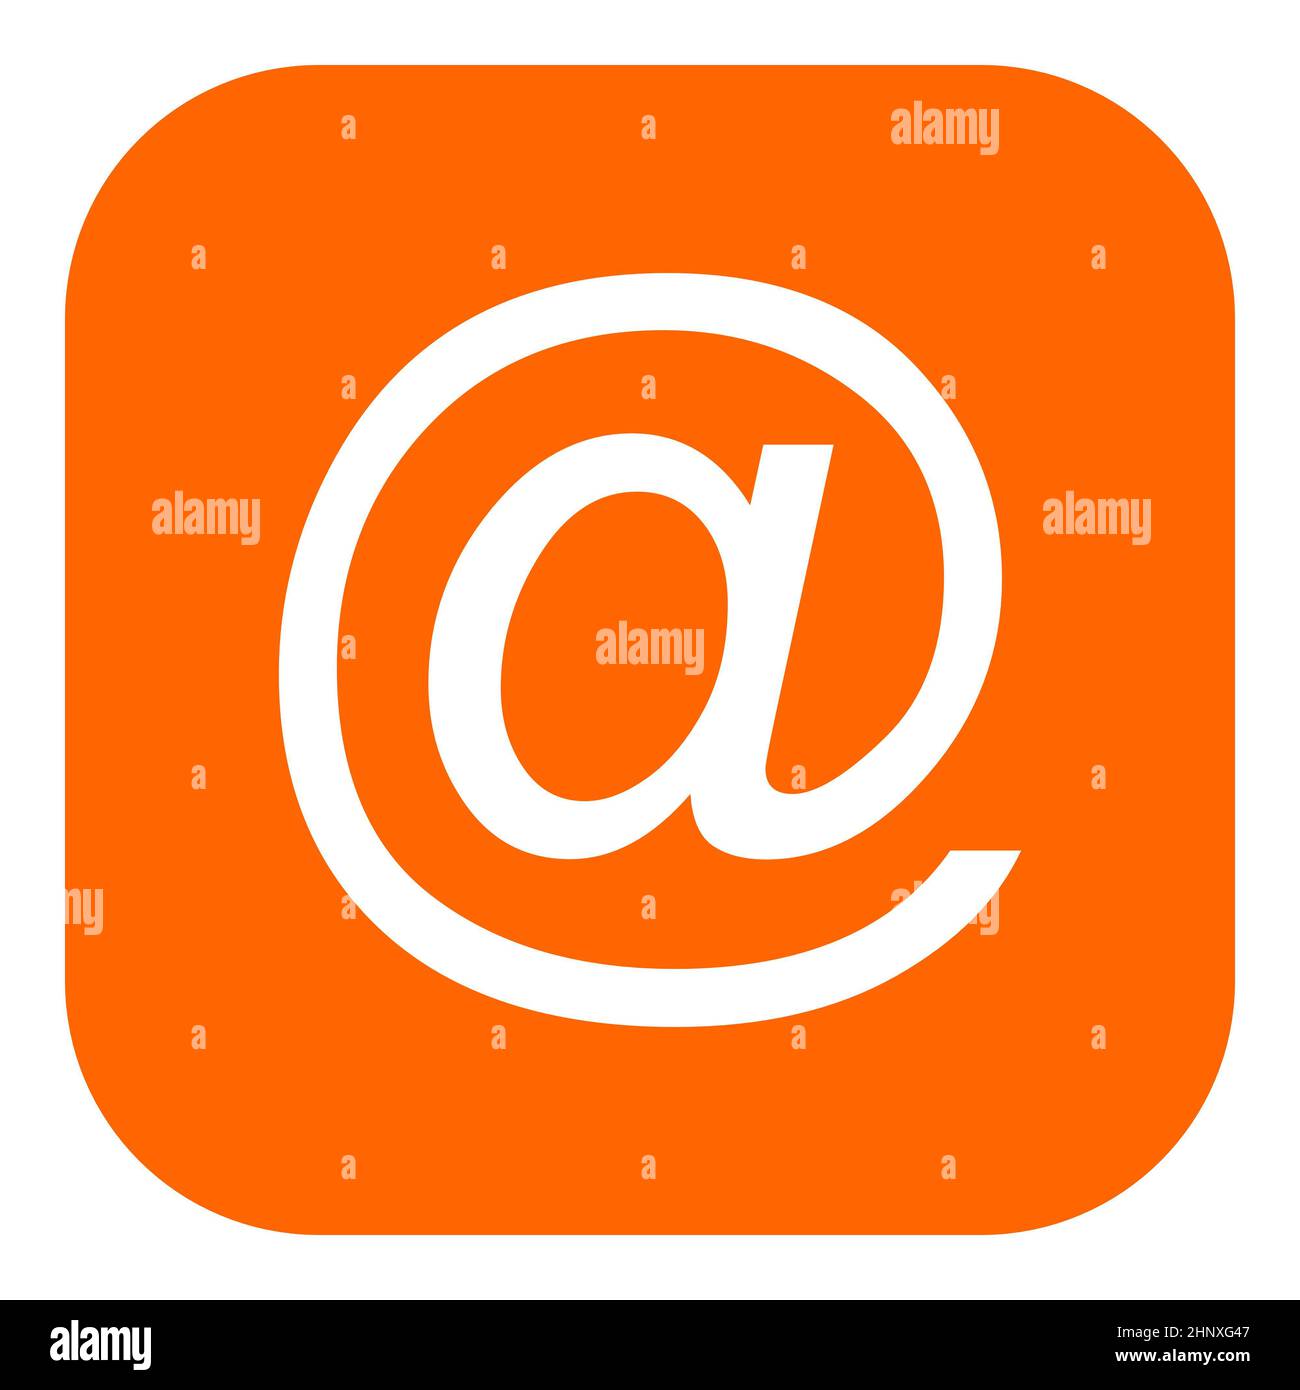 E-mail symbol and app icon Stock Photo